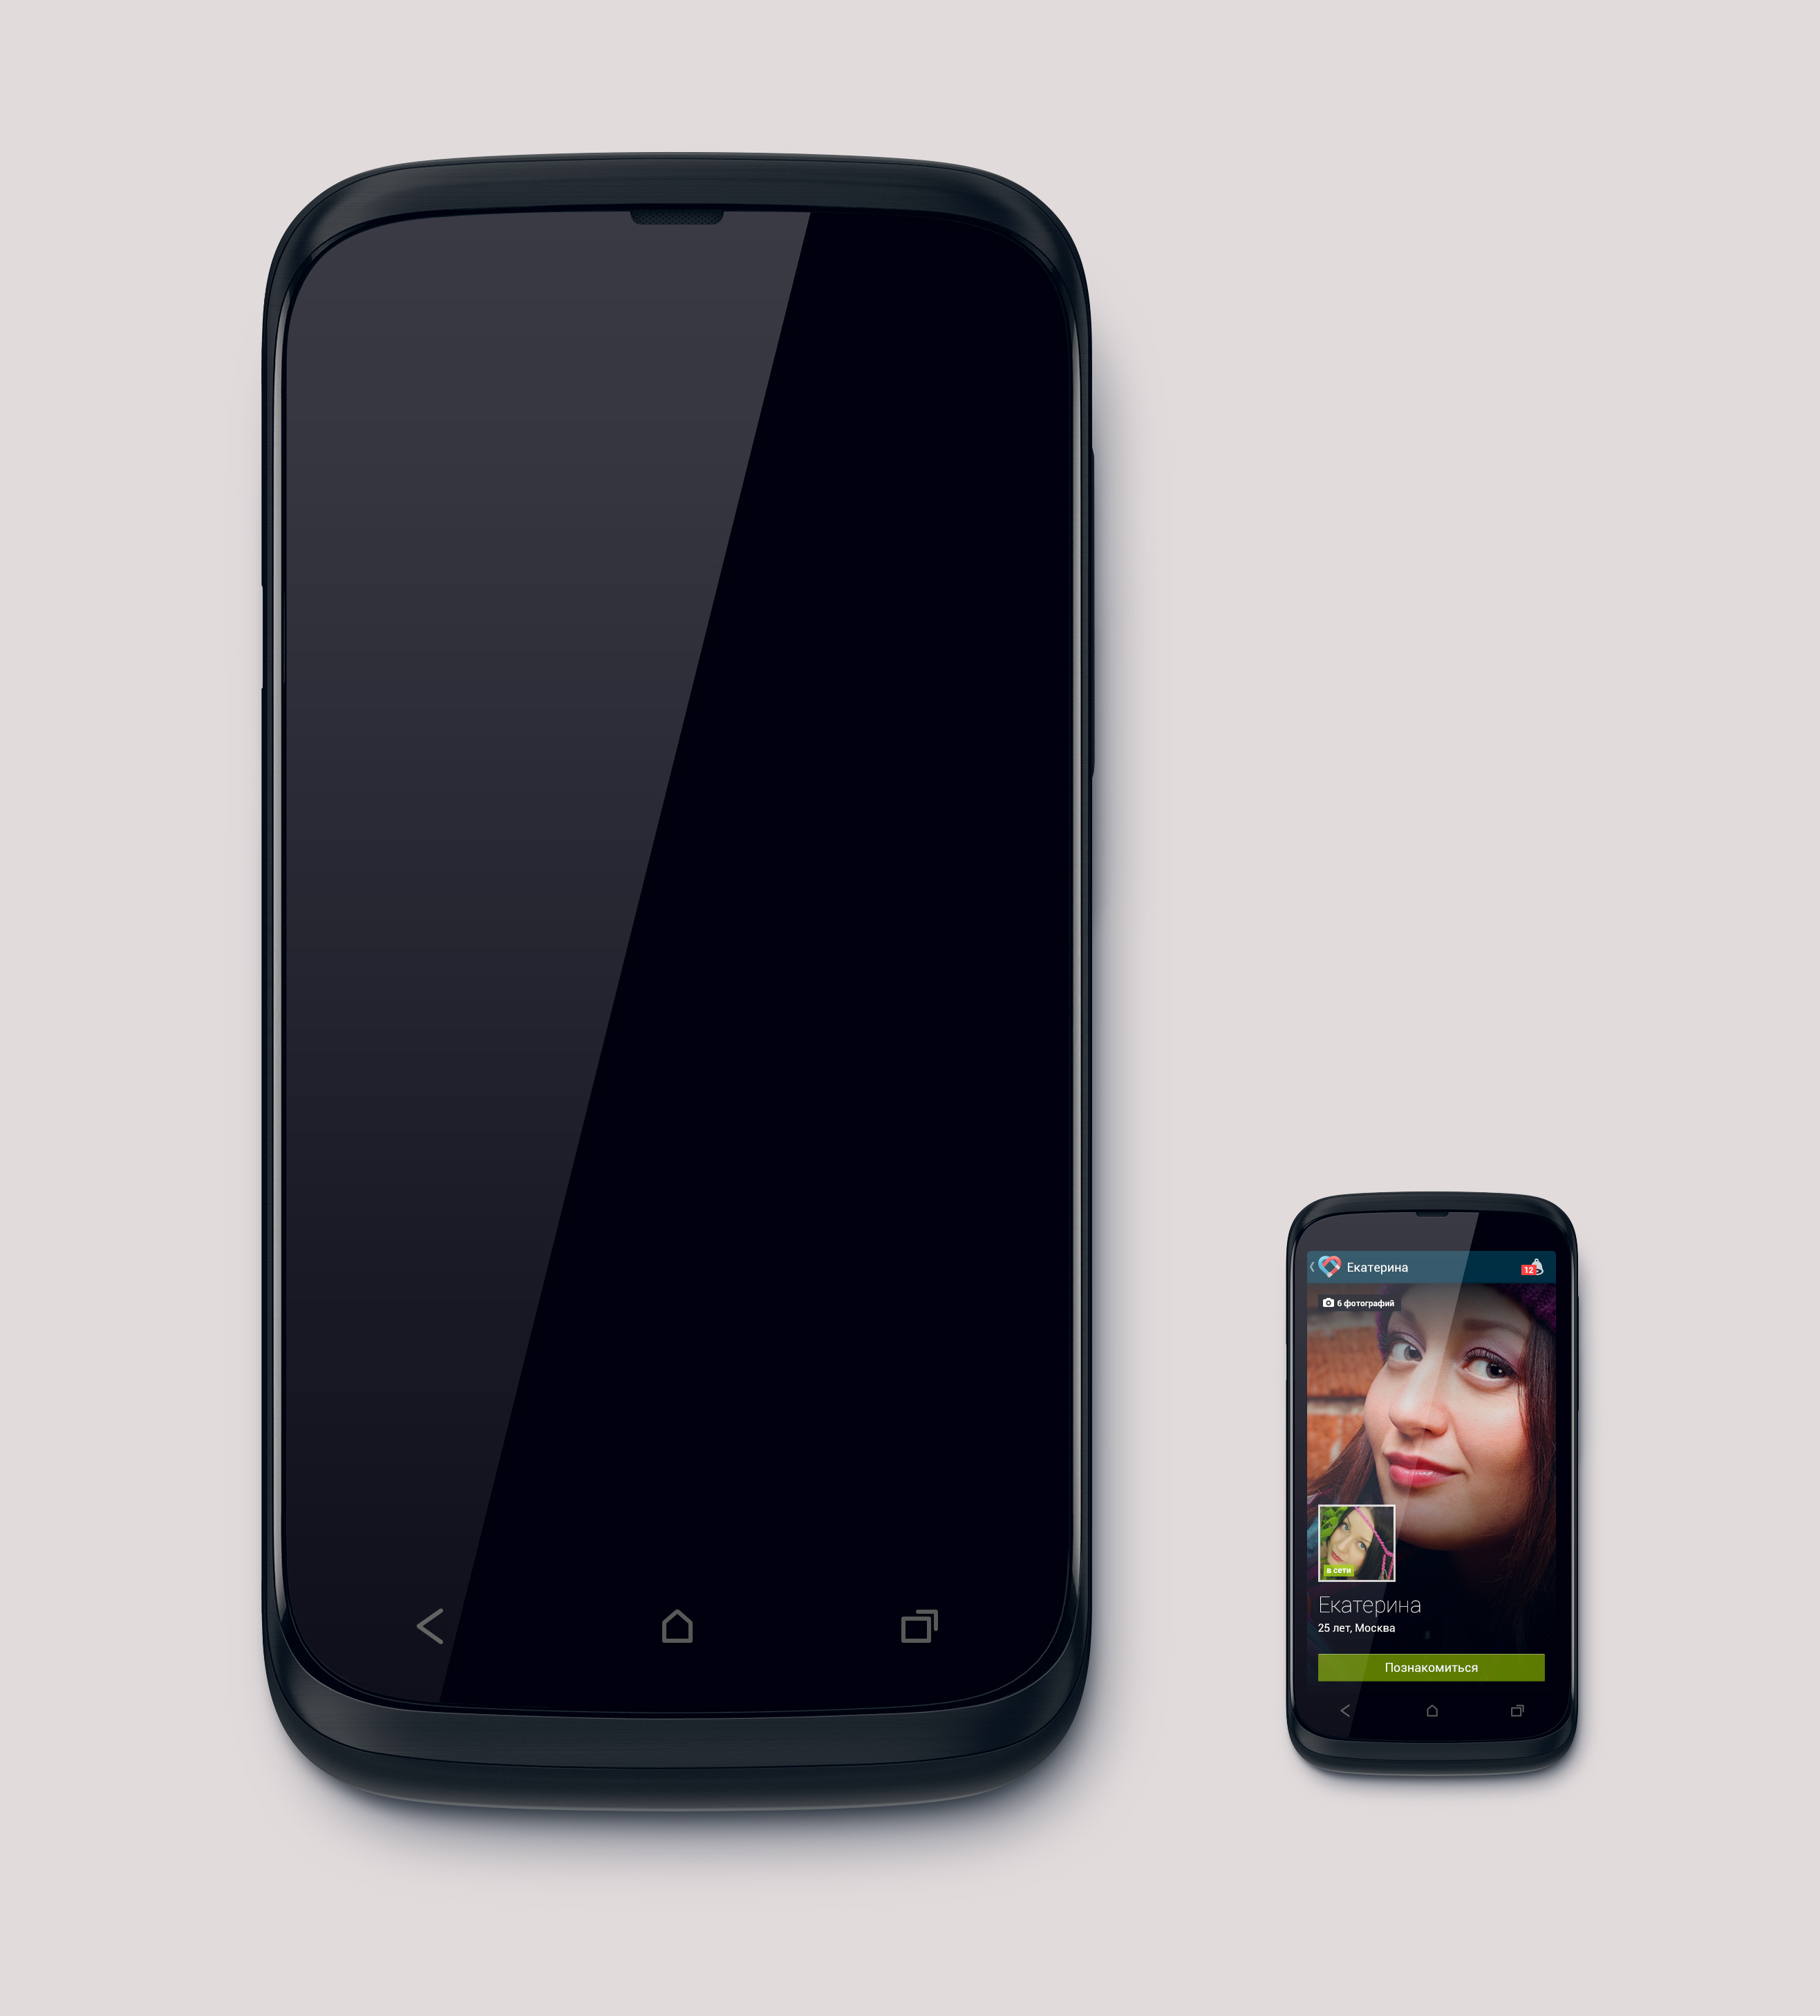 Mobile HTC Phone Mockup